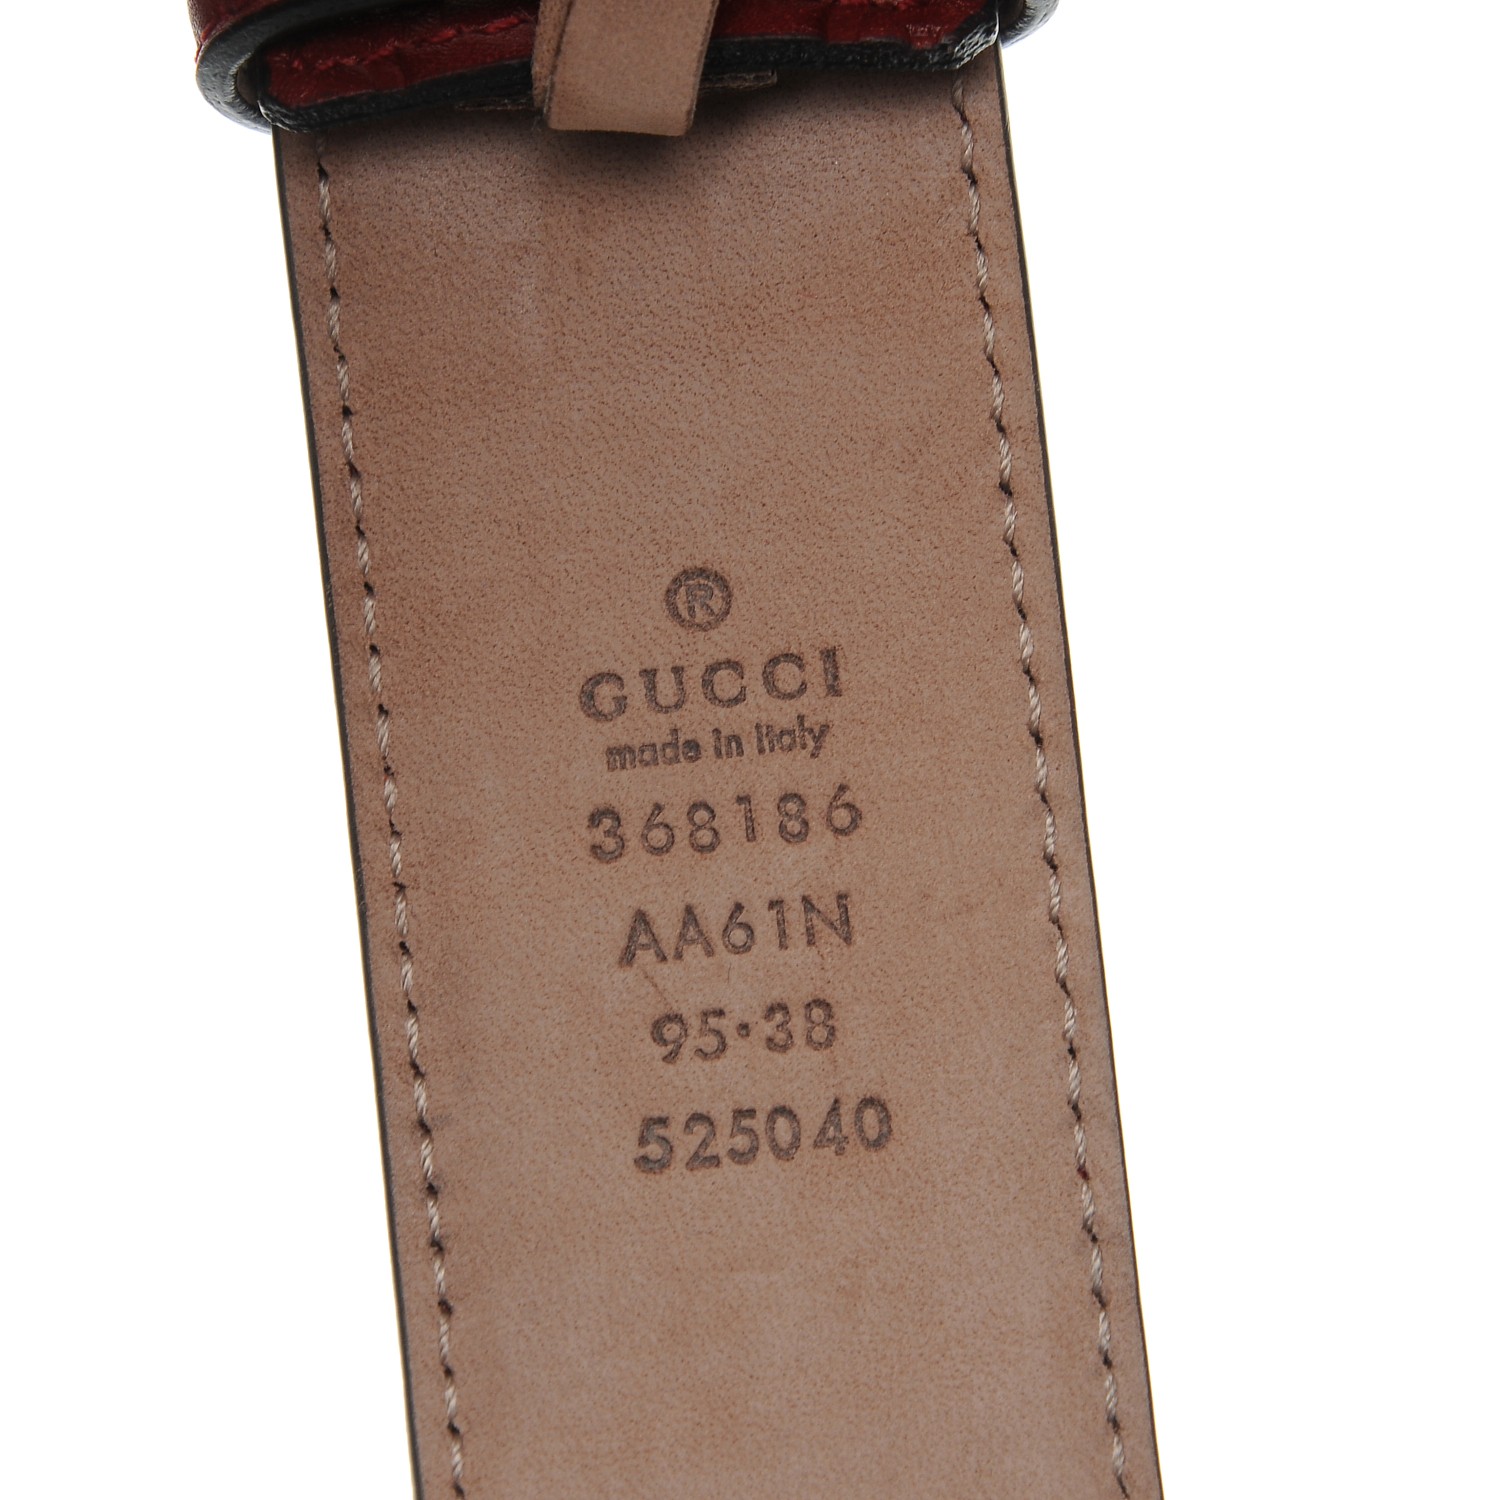 gucci belt aa61n